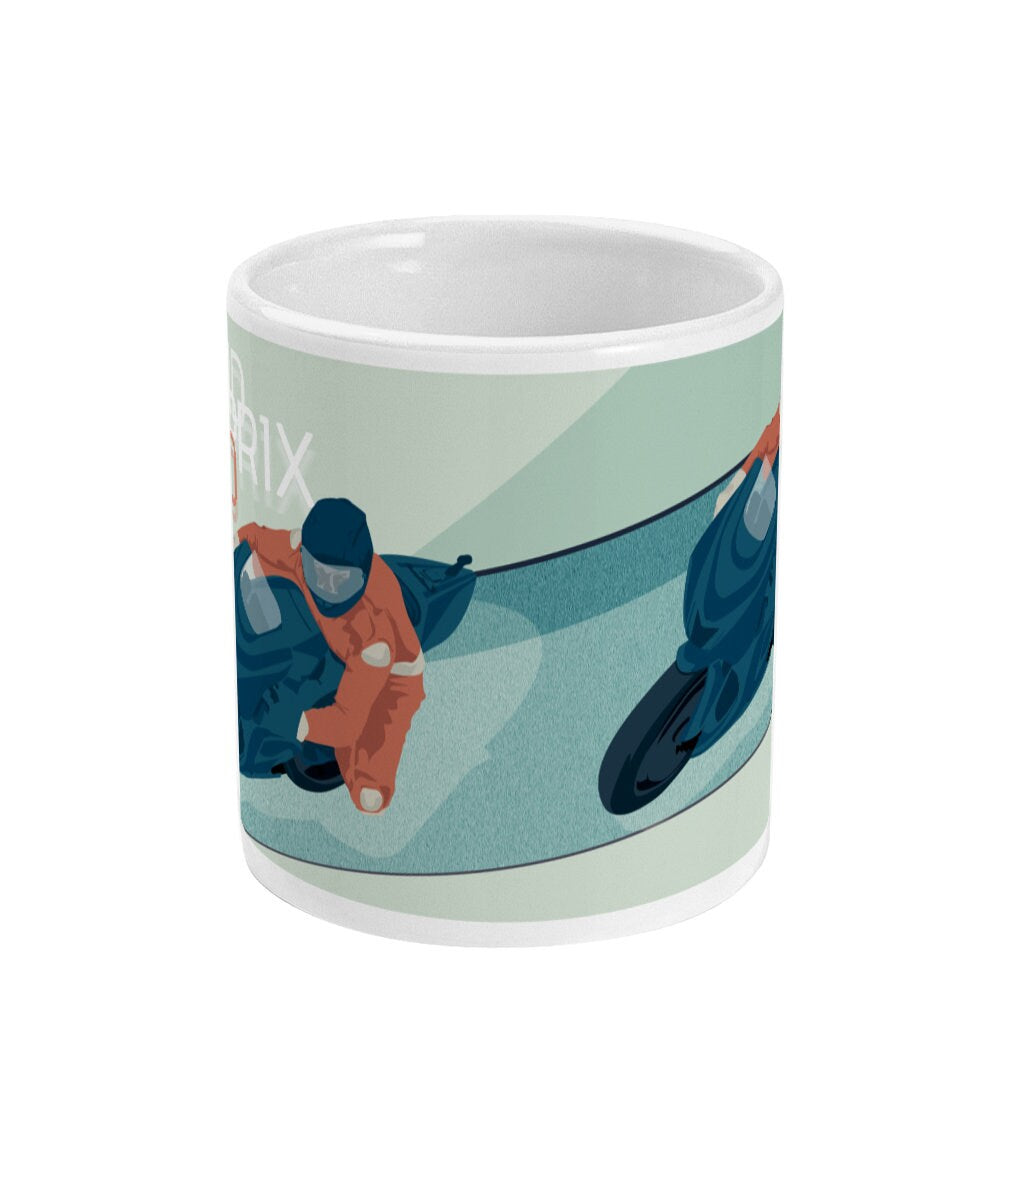 "Moto GP" cup or mug - Customizable